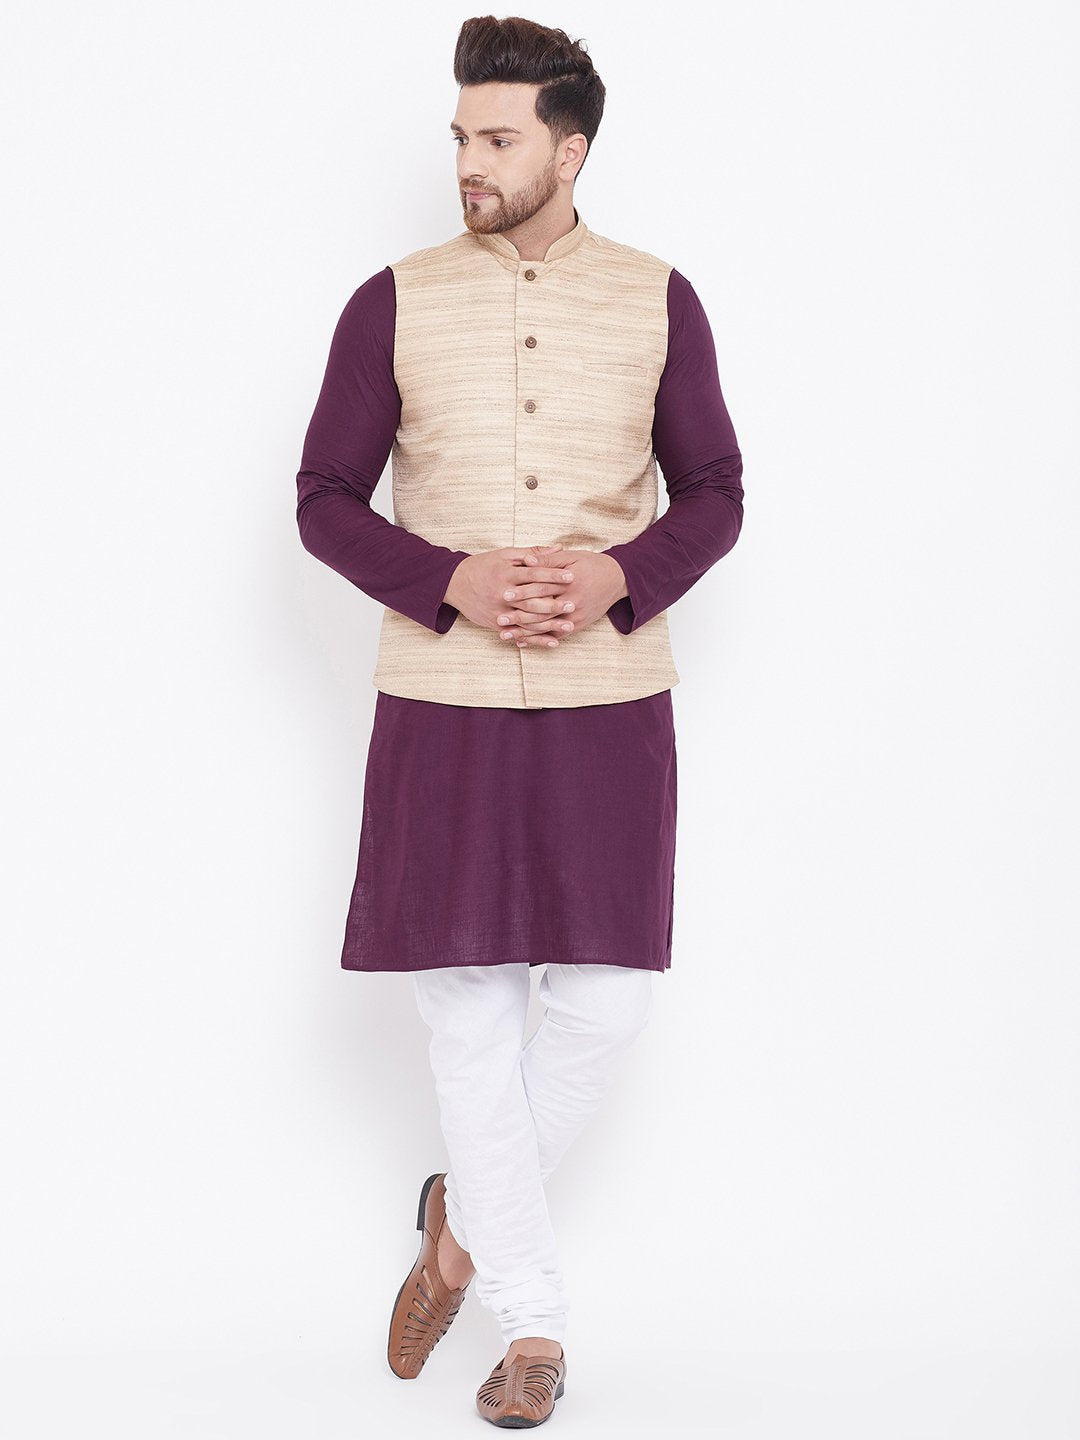 Men's Beige, Purple And White Cotton Blend Jacket, Kurta and Pyjama Set - Vastramay